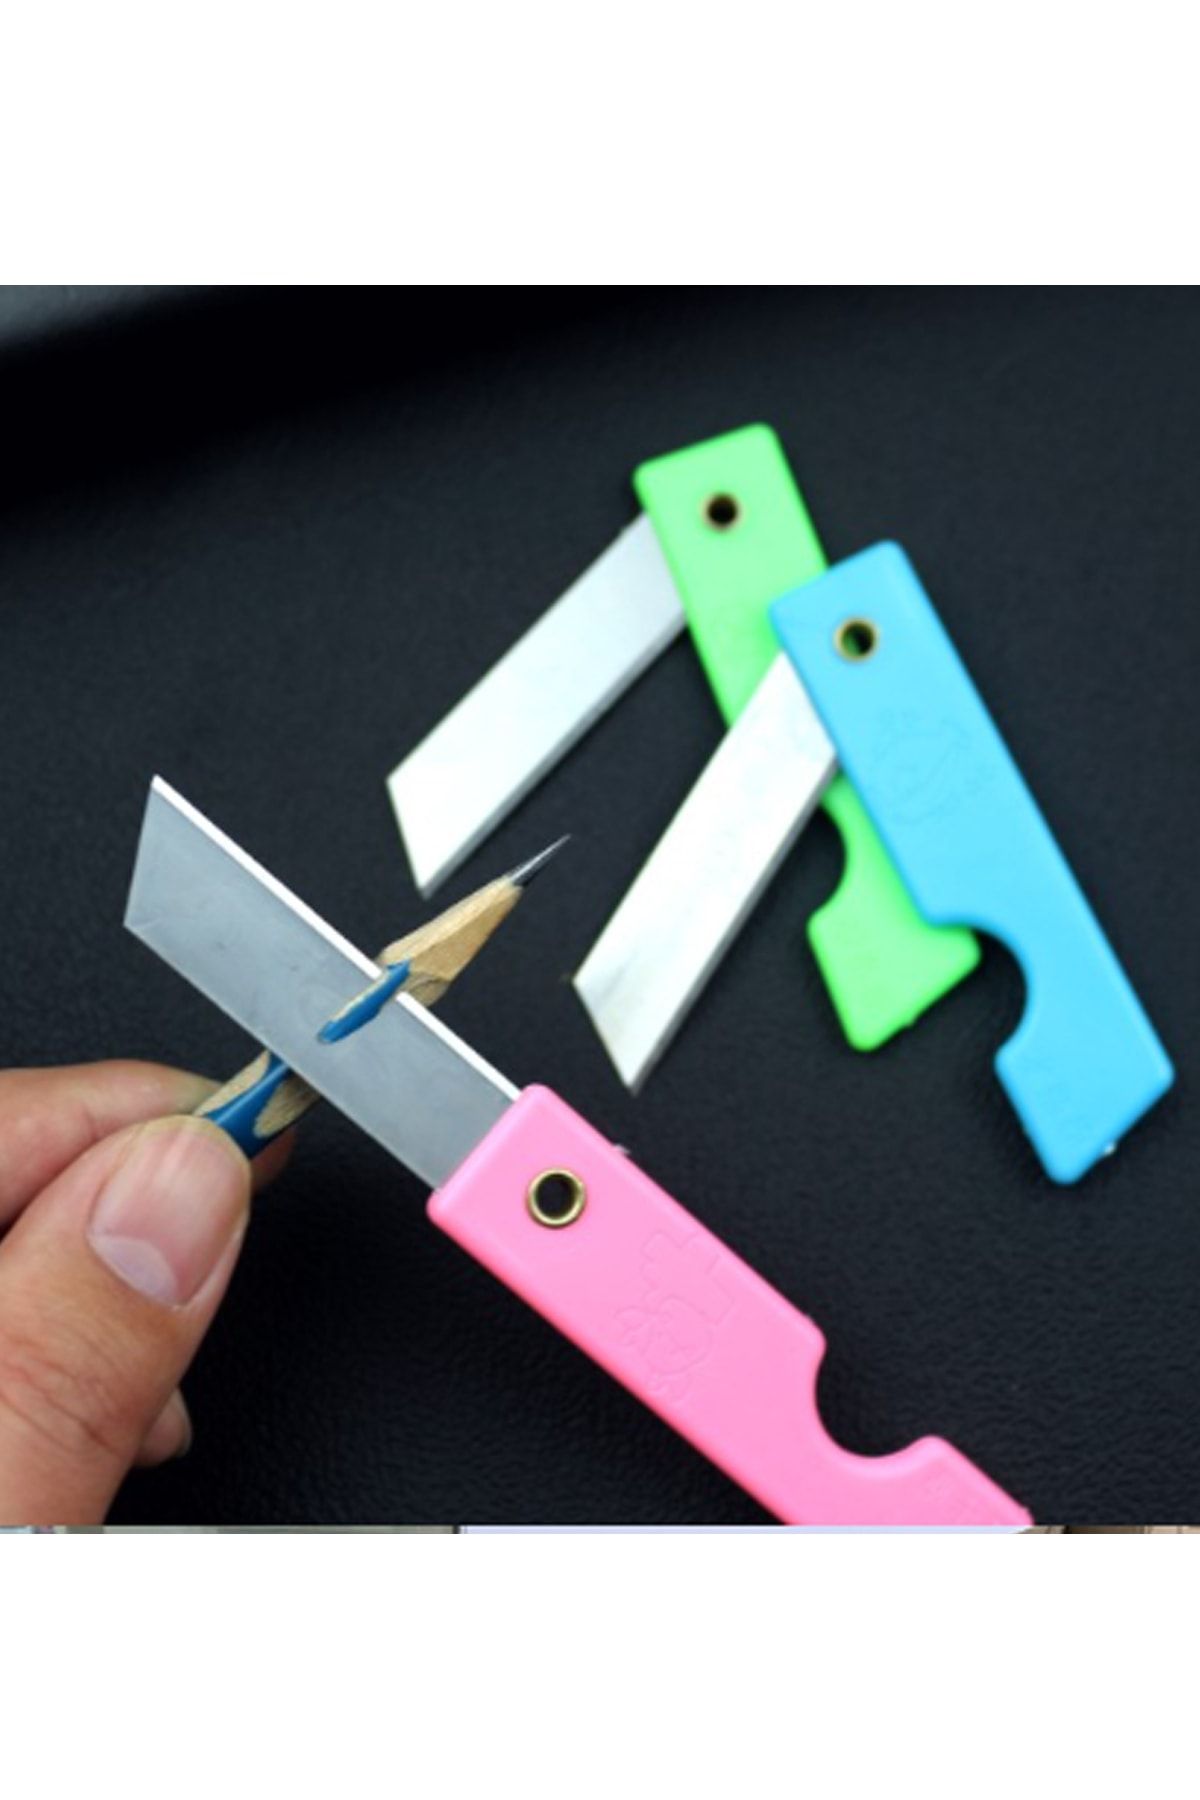 Vox Art Kalem Kesme Bıçağı - Zarf Bıçağı - 1 Adet